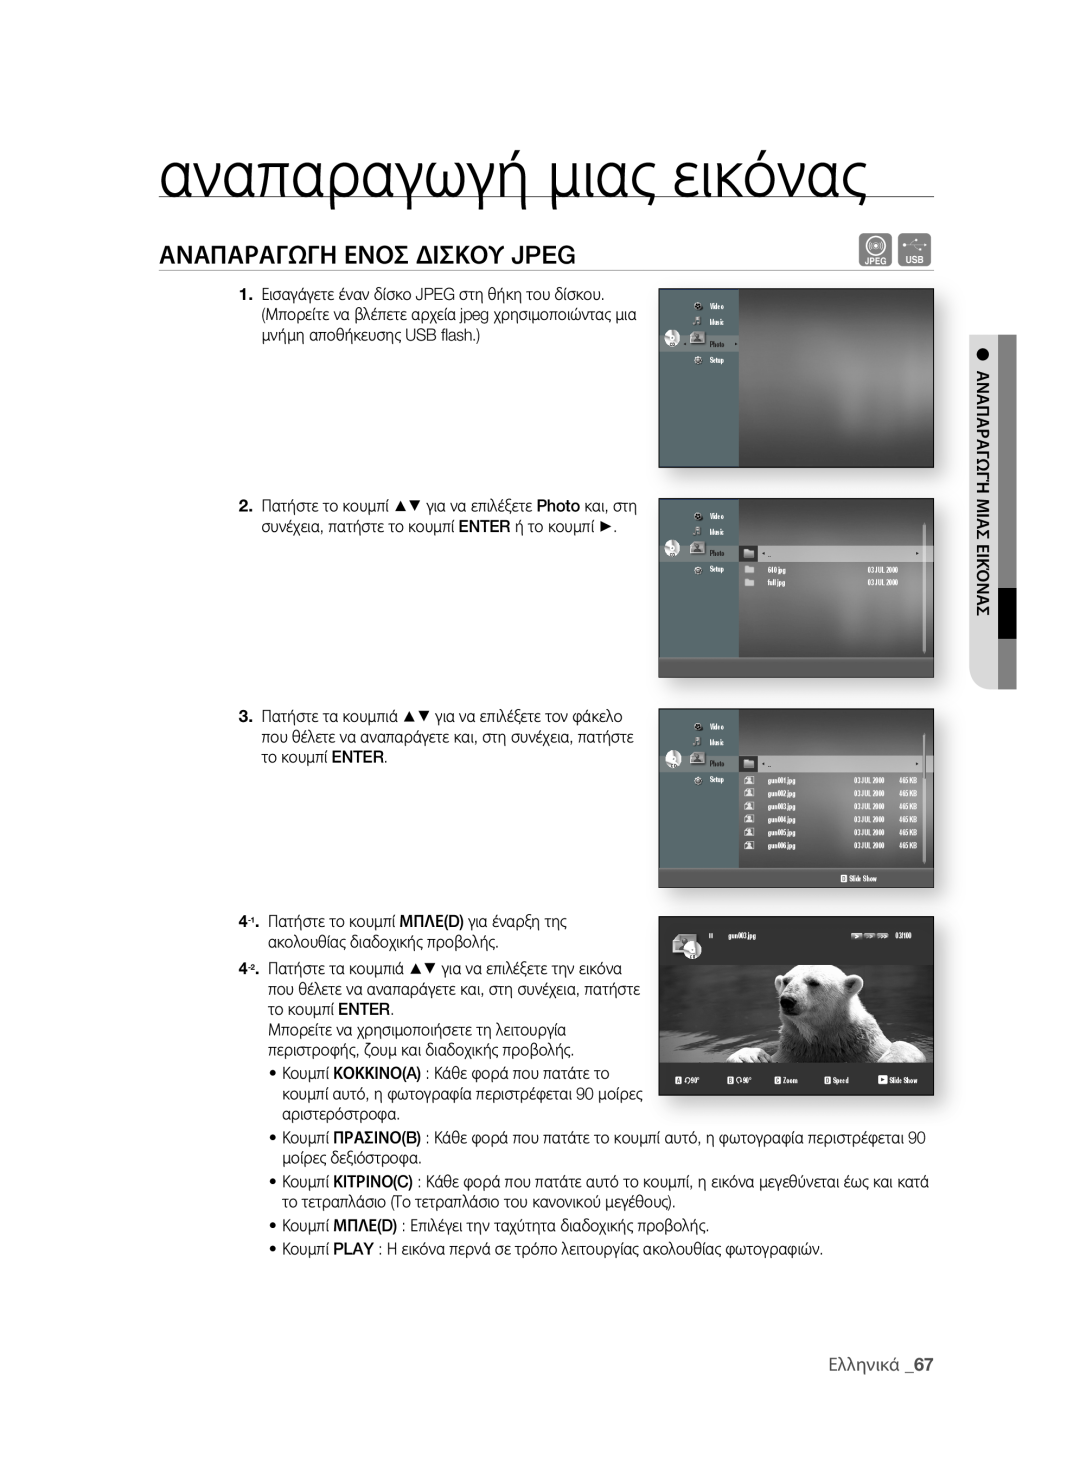 Samsung BD-P1580/EDC manual αναπαραγωγή μιας εικόνας, ΑΝΑΠΑρΑΓΩΓη εΝοσ δισΚοΥ JPEG, Ελληνικά  